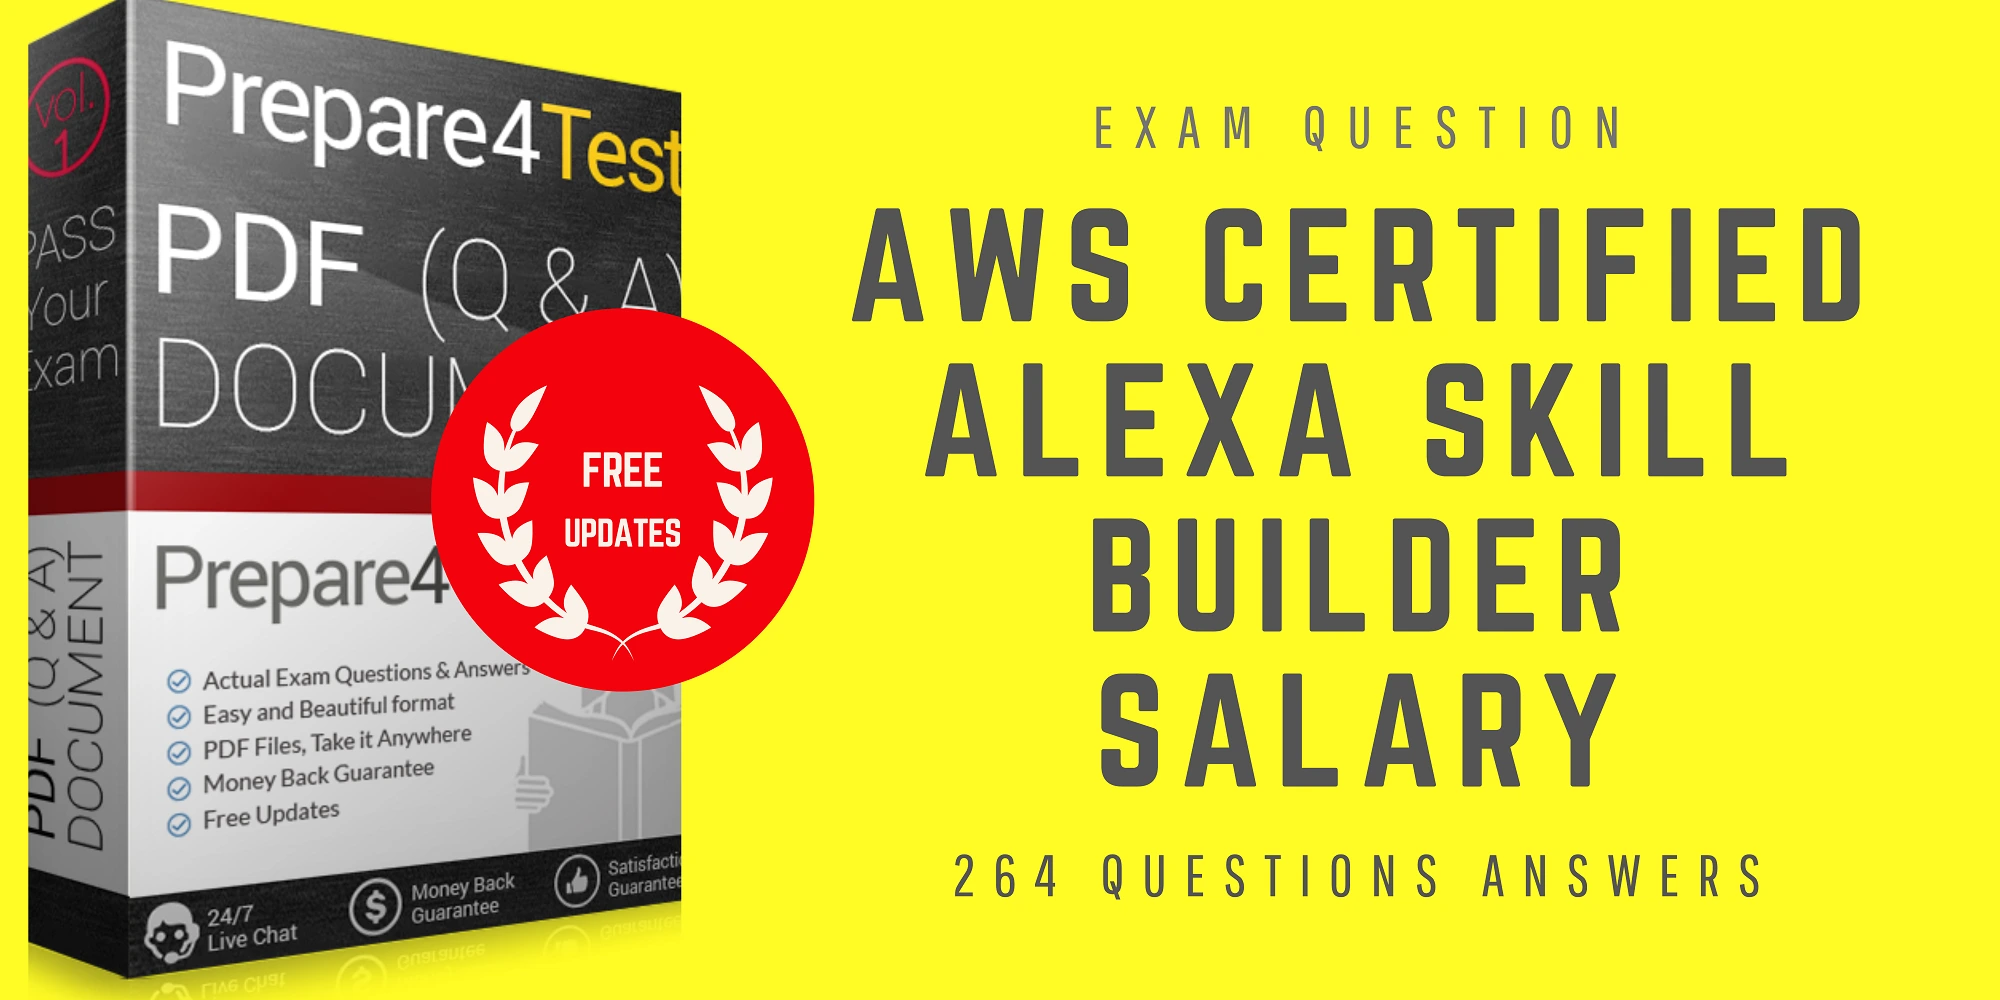 AWS Certified Alexa Skill Builder Salary guarantee